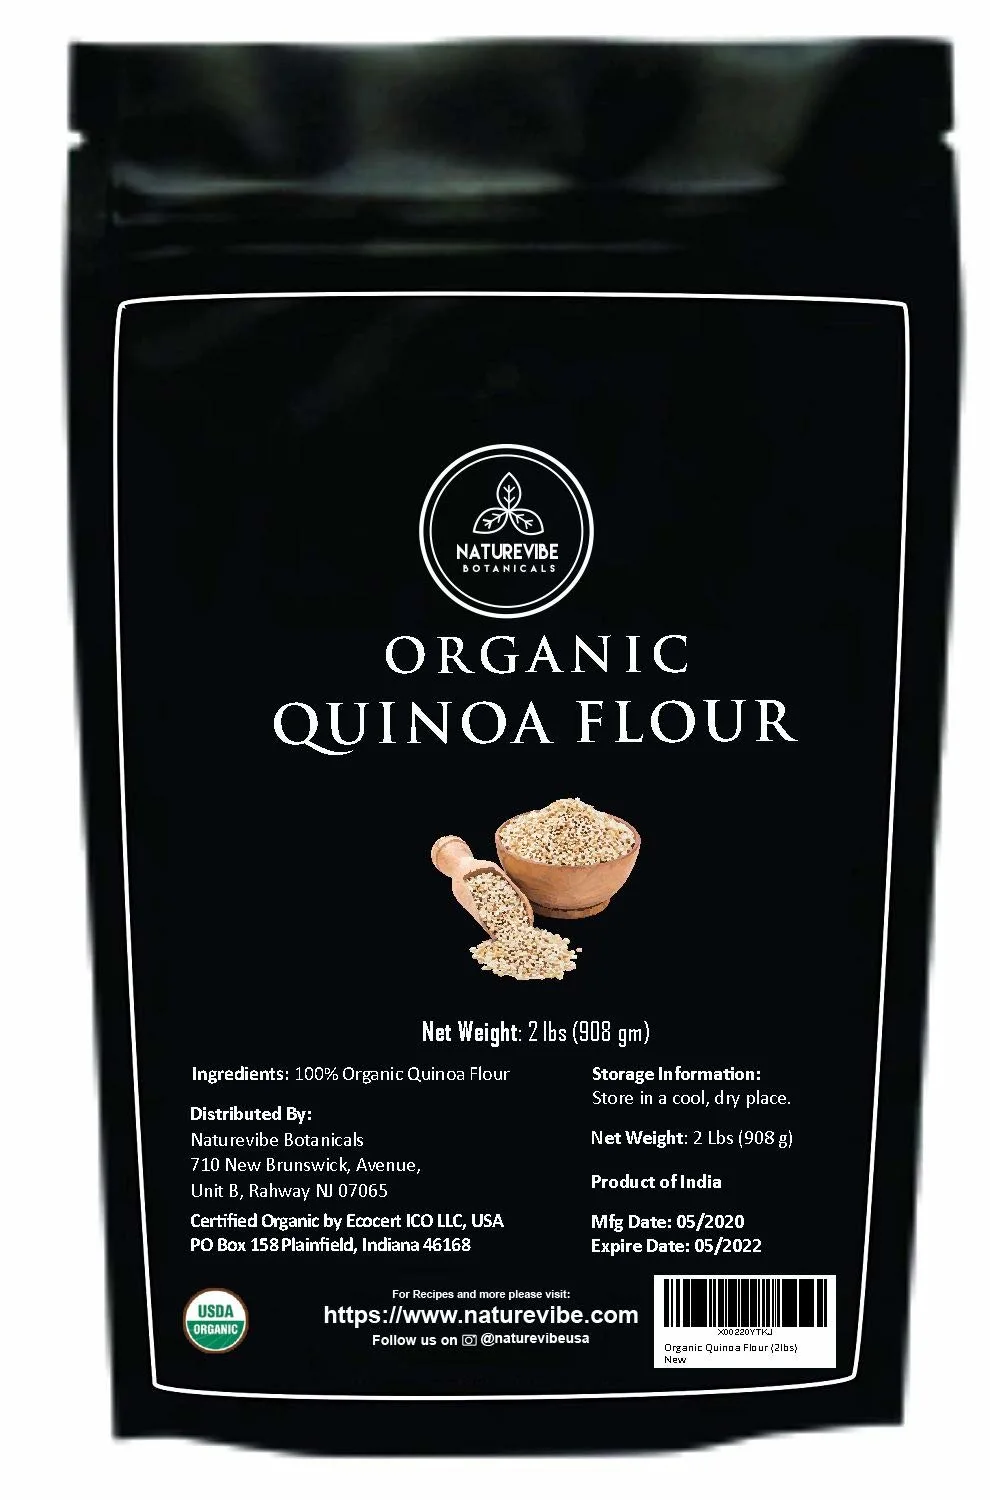 Naturevibe Botanicals Organic Quinoa Flour, 2lbs